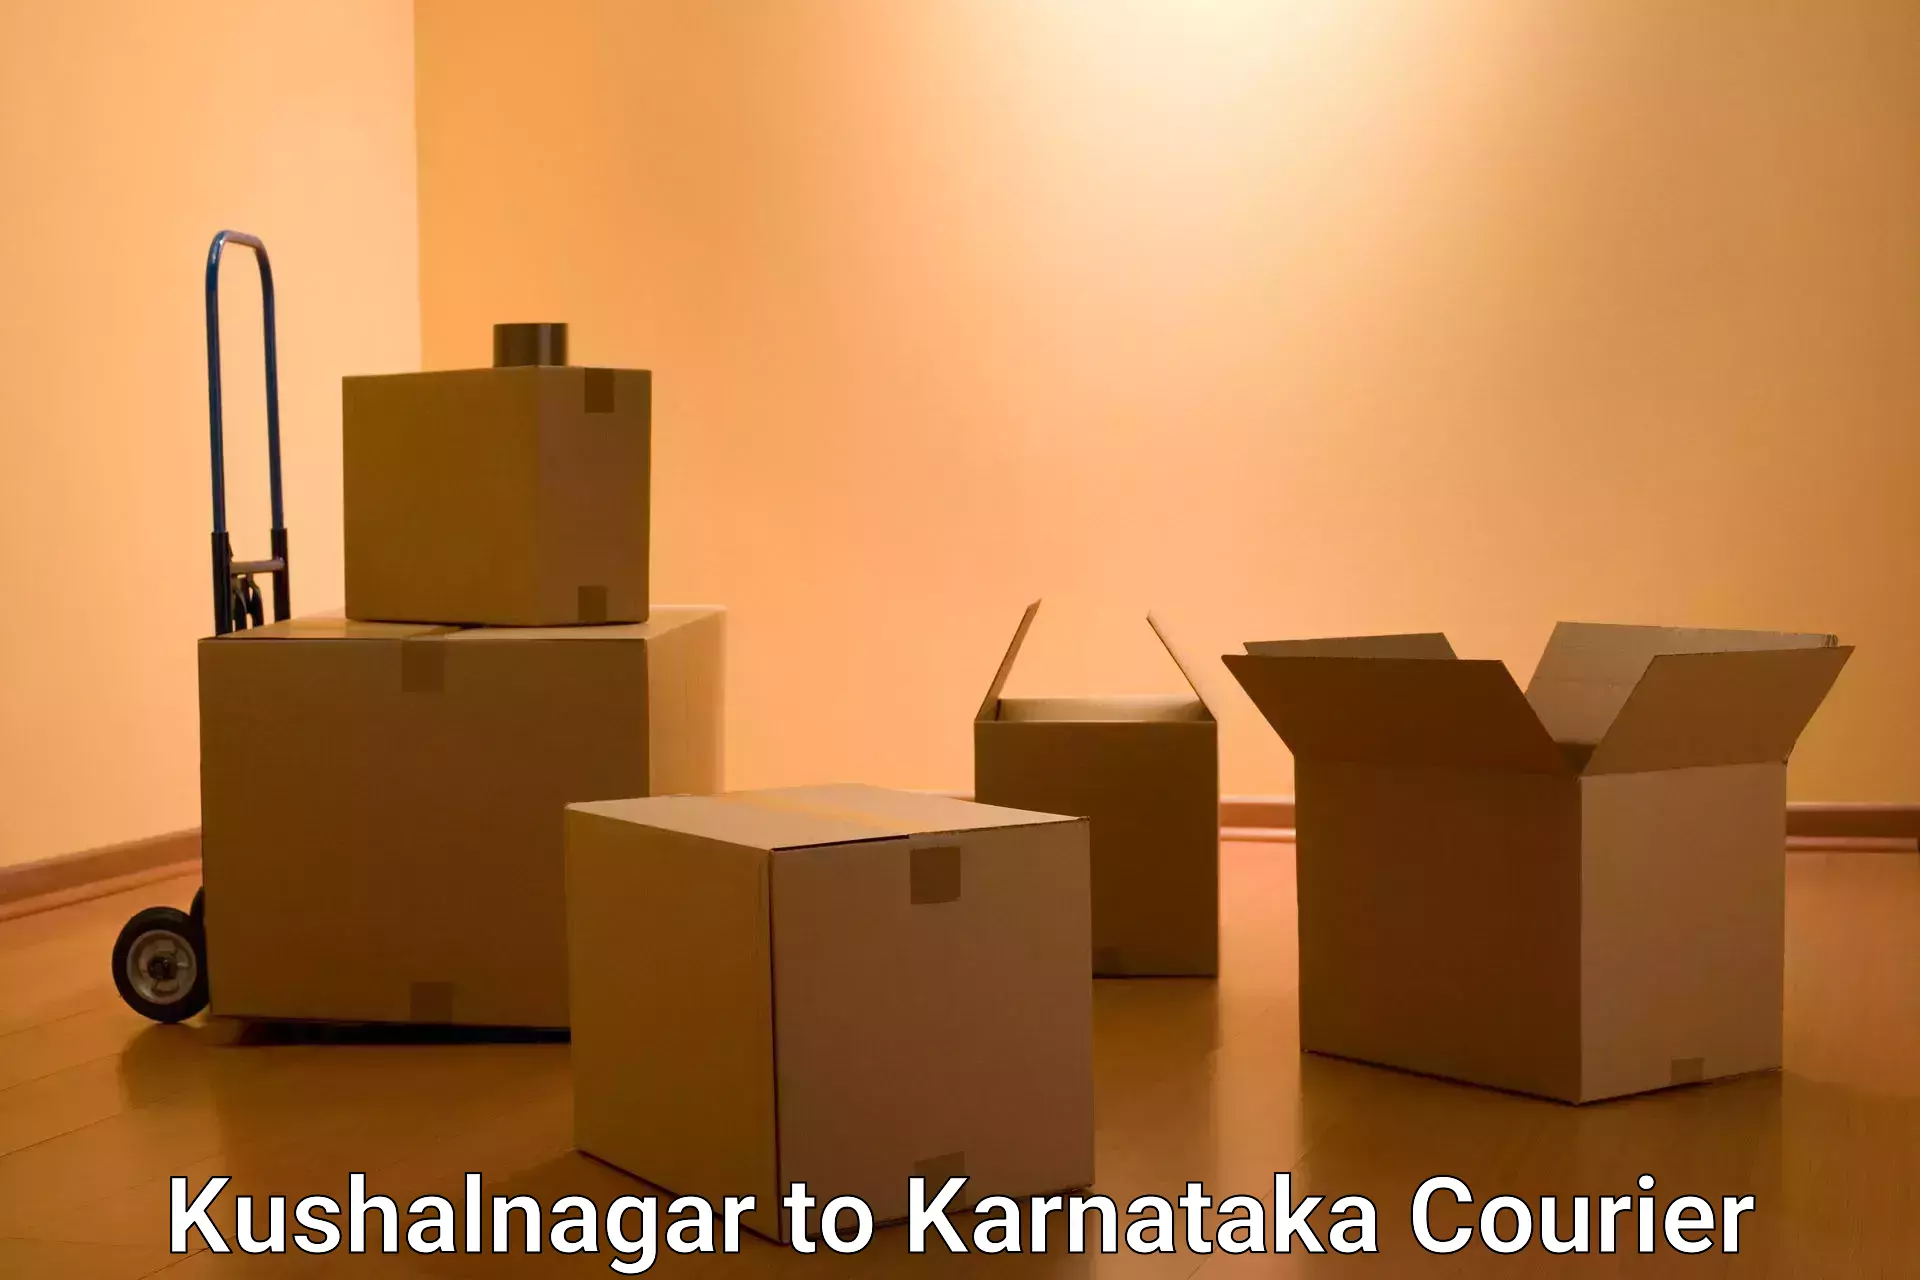 Courier service efficiency Kushalnagar to Karnataka